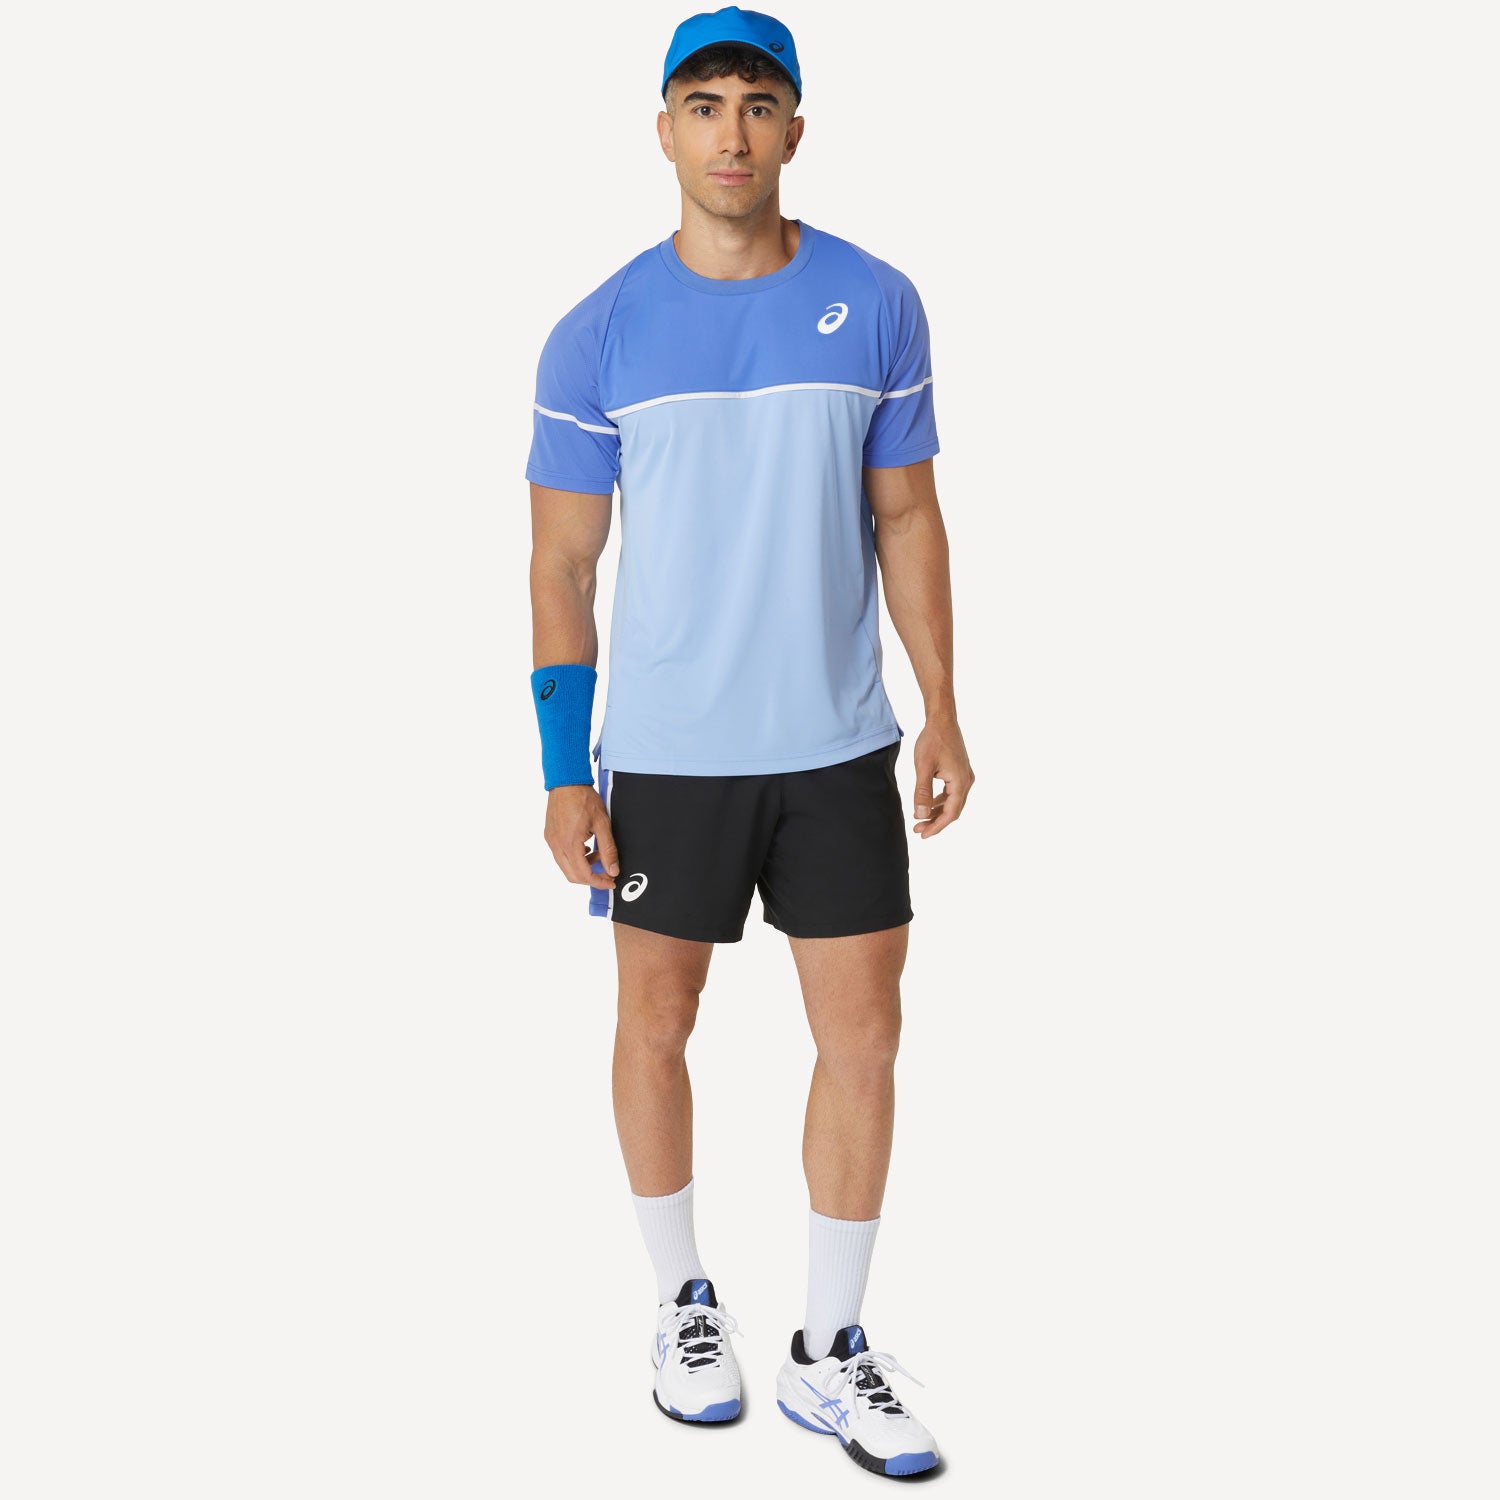 ASICS Game Men's Tennis Shirt - Blue (6)